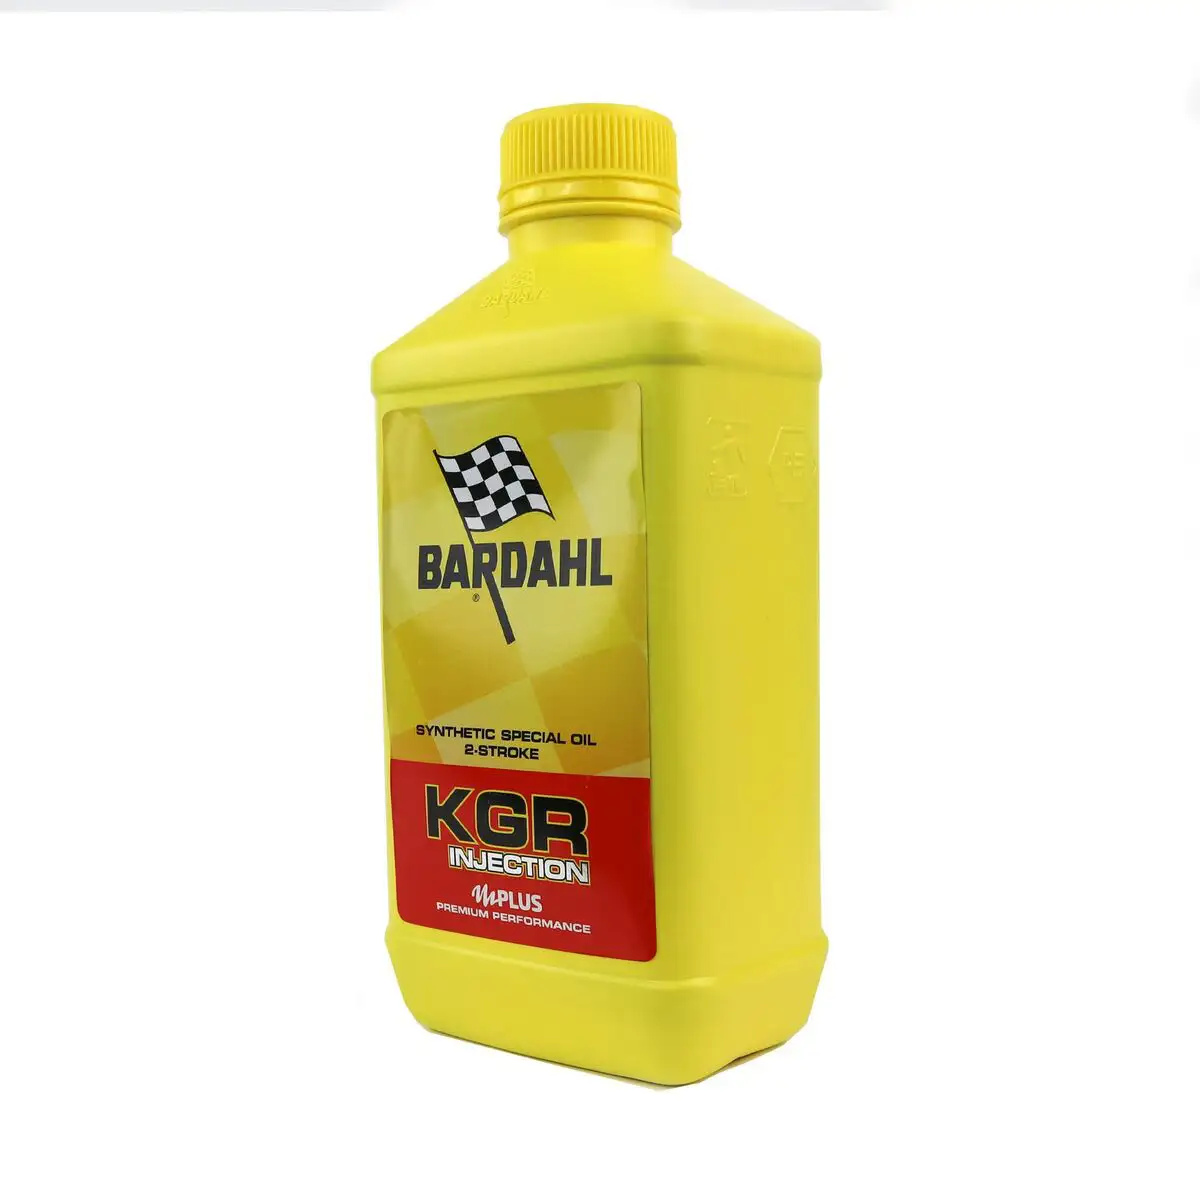  Bardahl - Nettoyant pour injecteurs diesel, 500 ml